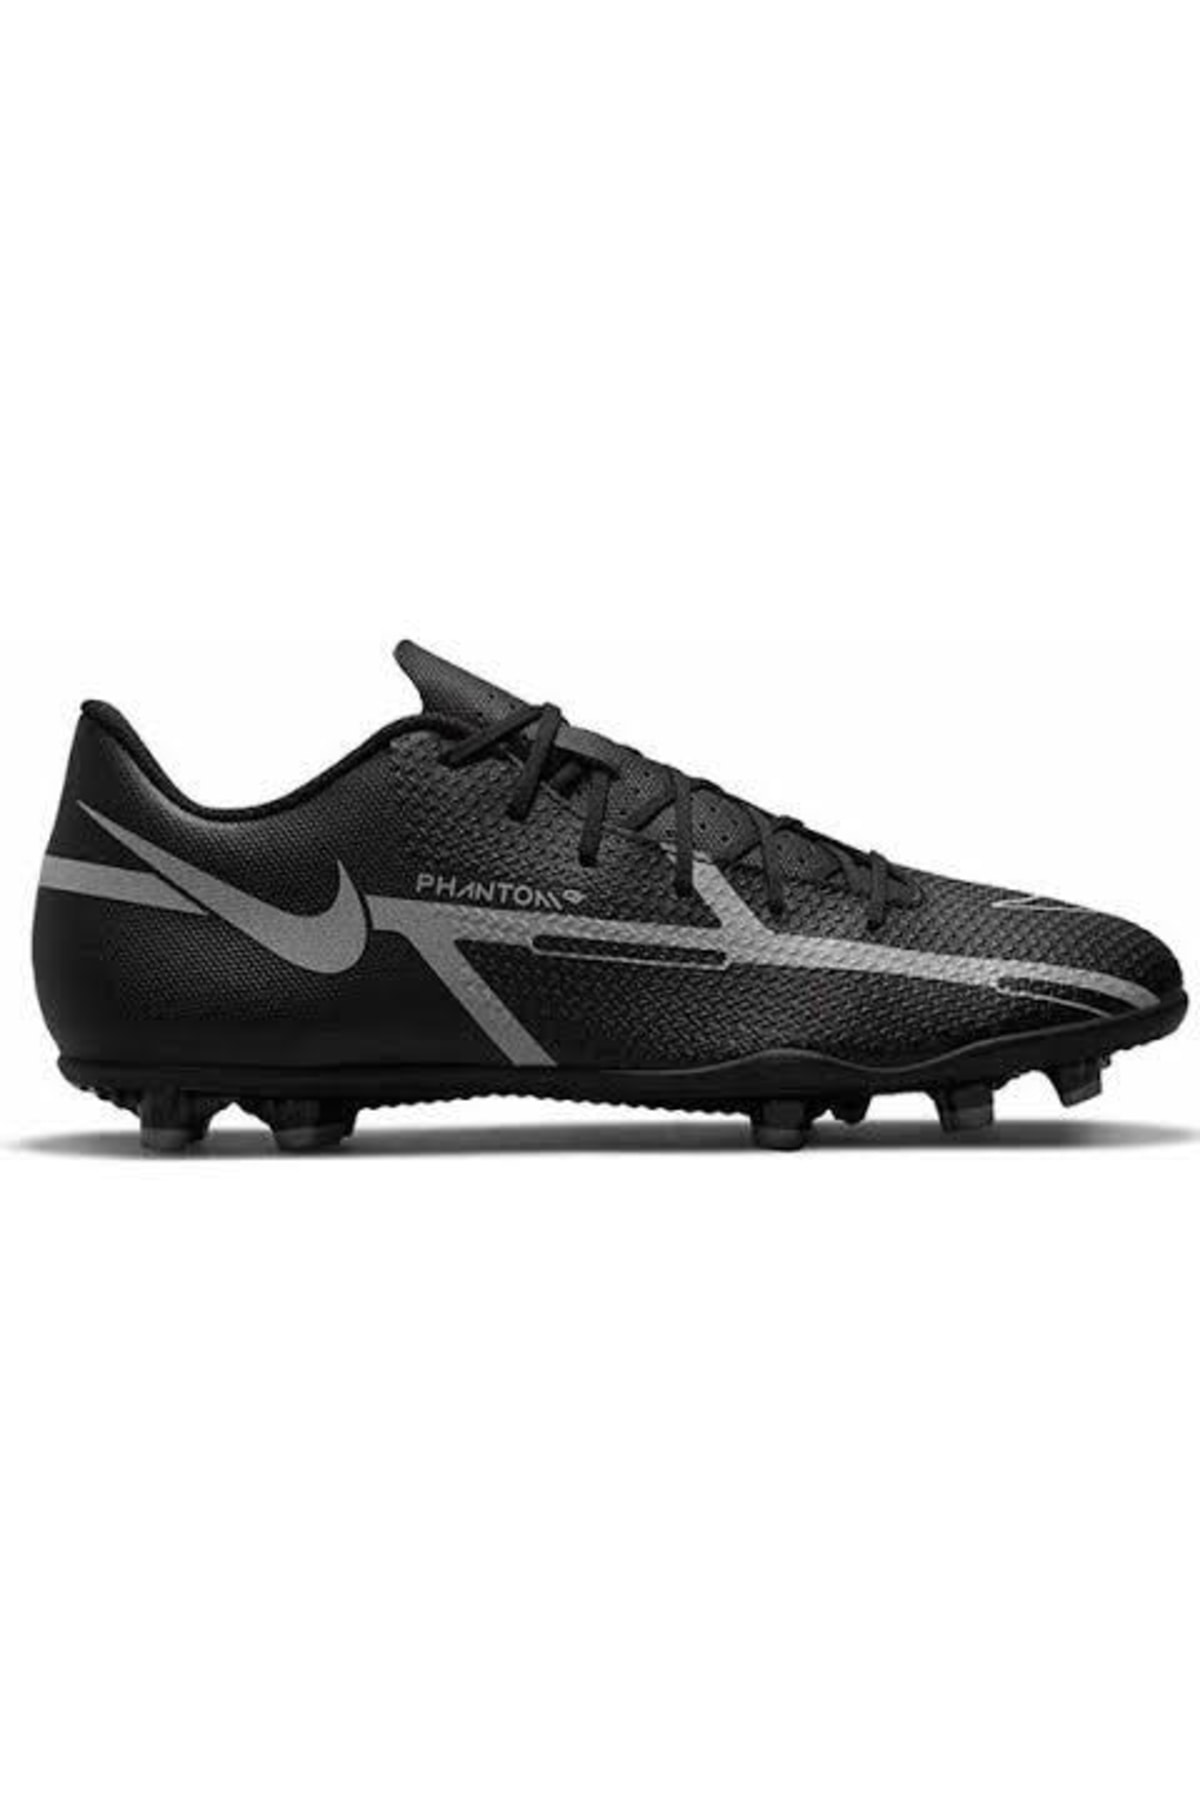 Nike Phantom Gt2 Club Fg Mg Black Iron Grey Soccer Cleats Da5640-004 Men's 12